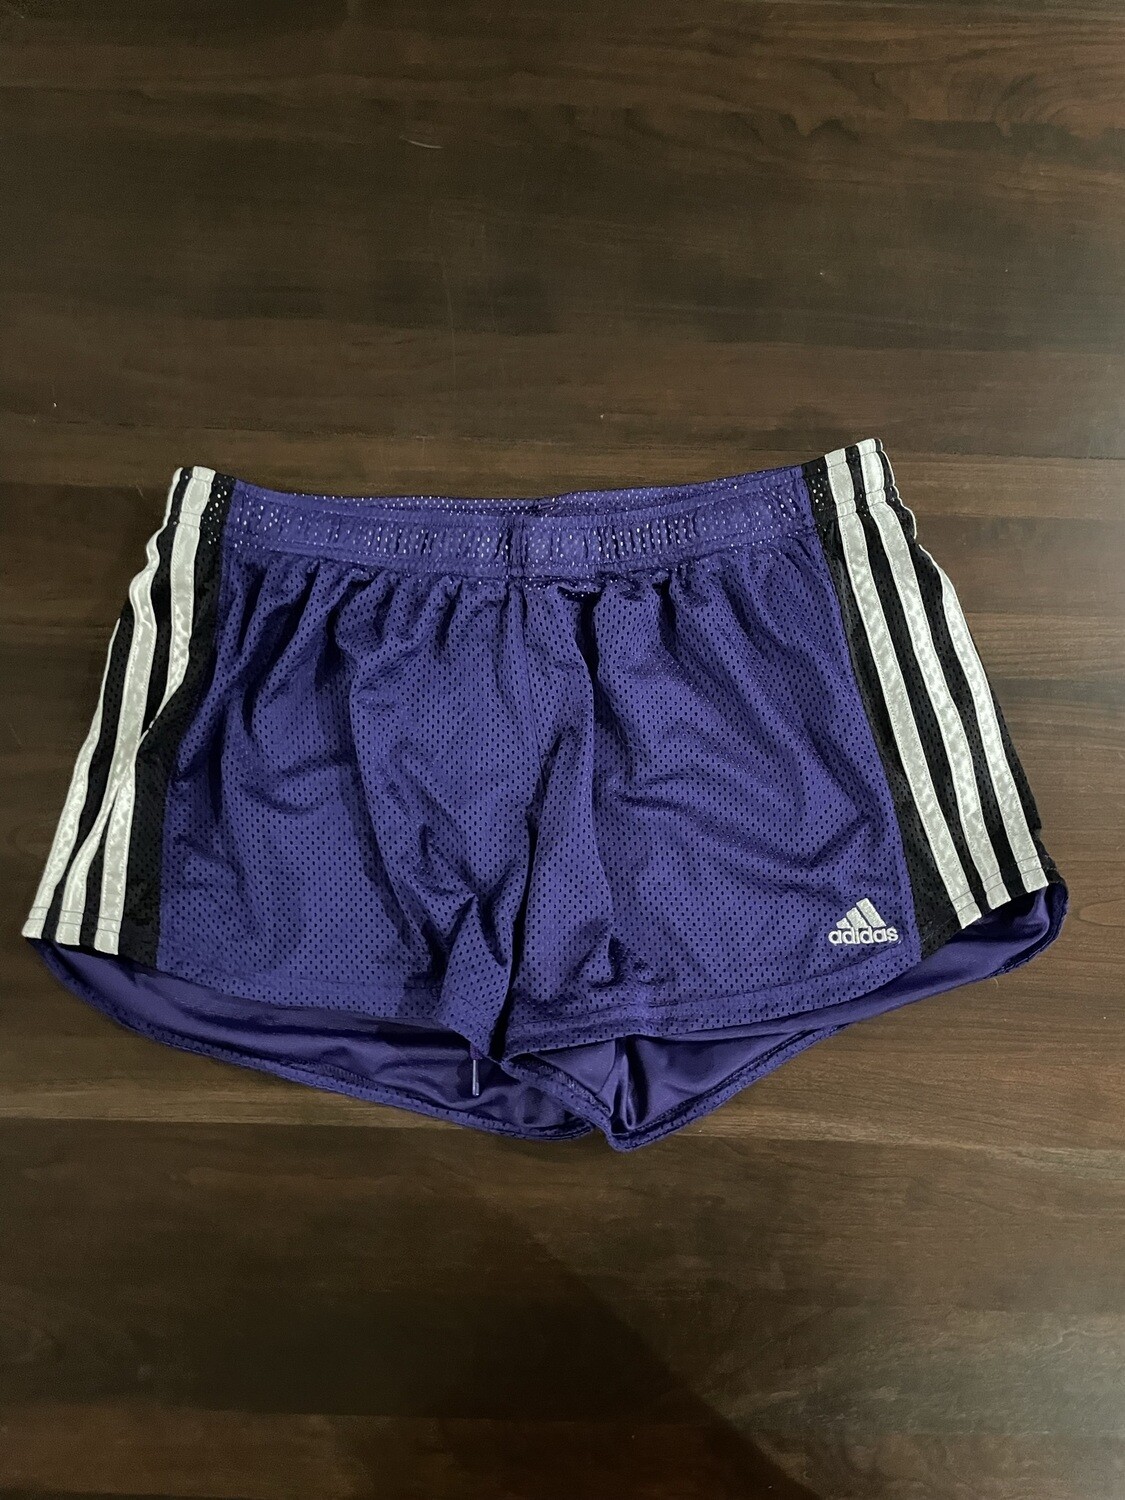 Adidas, Purple